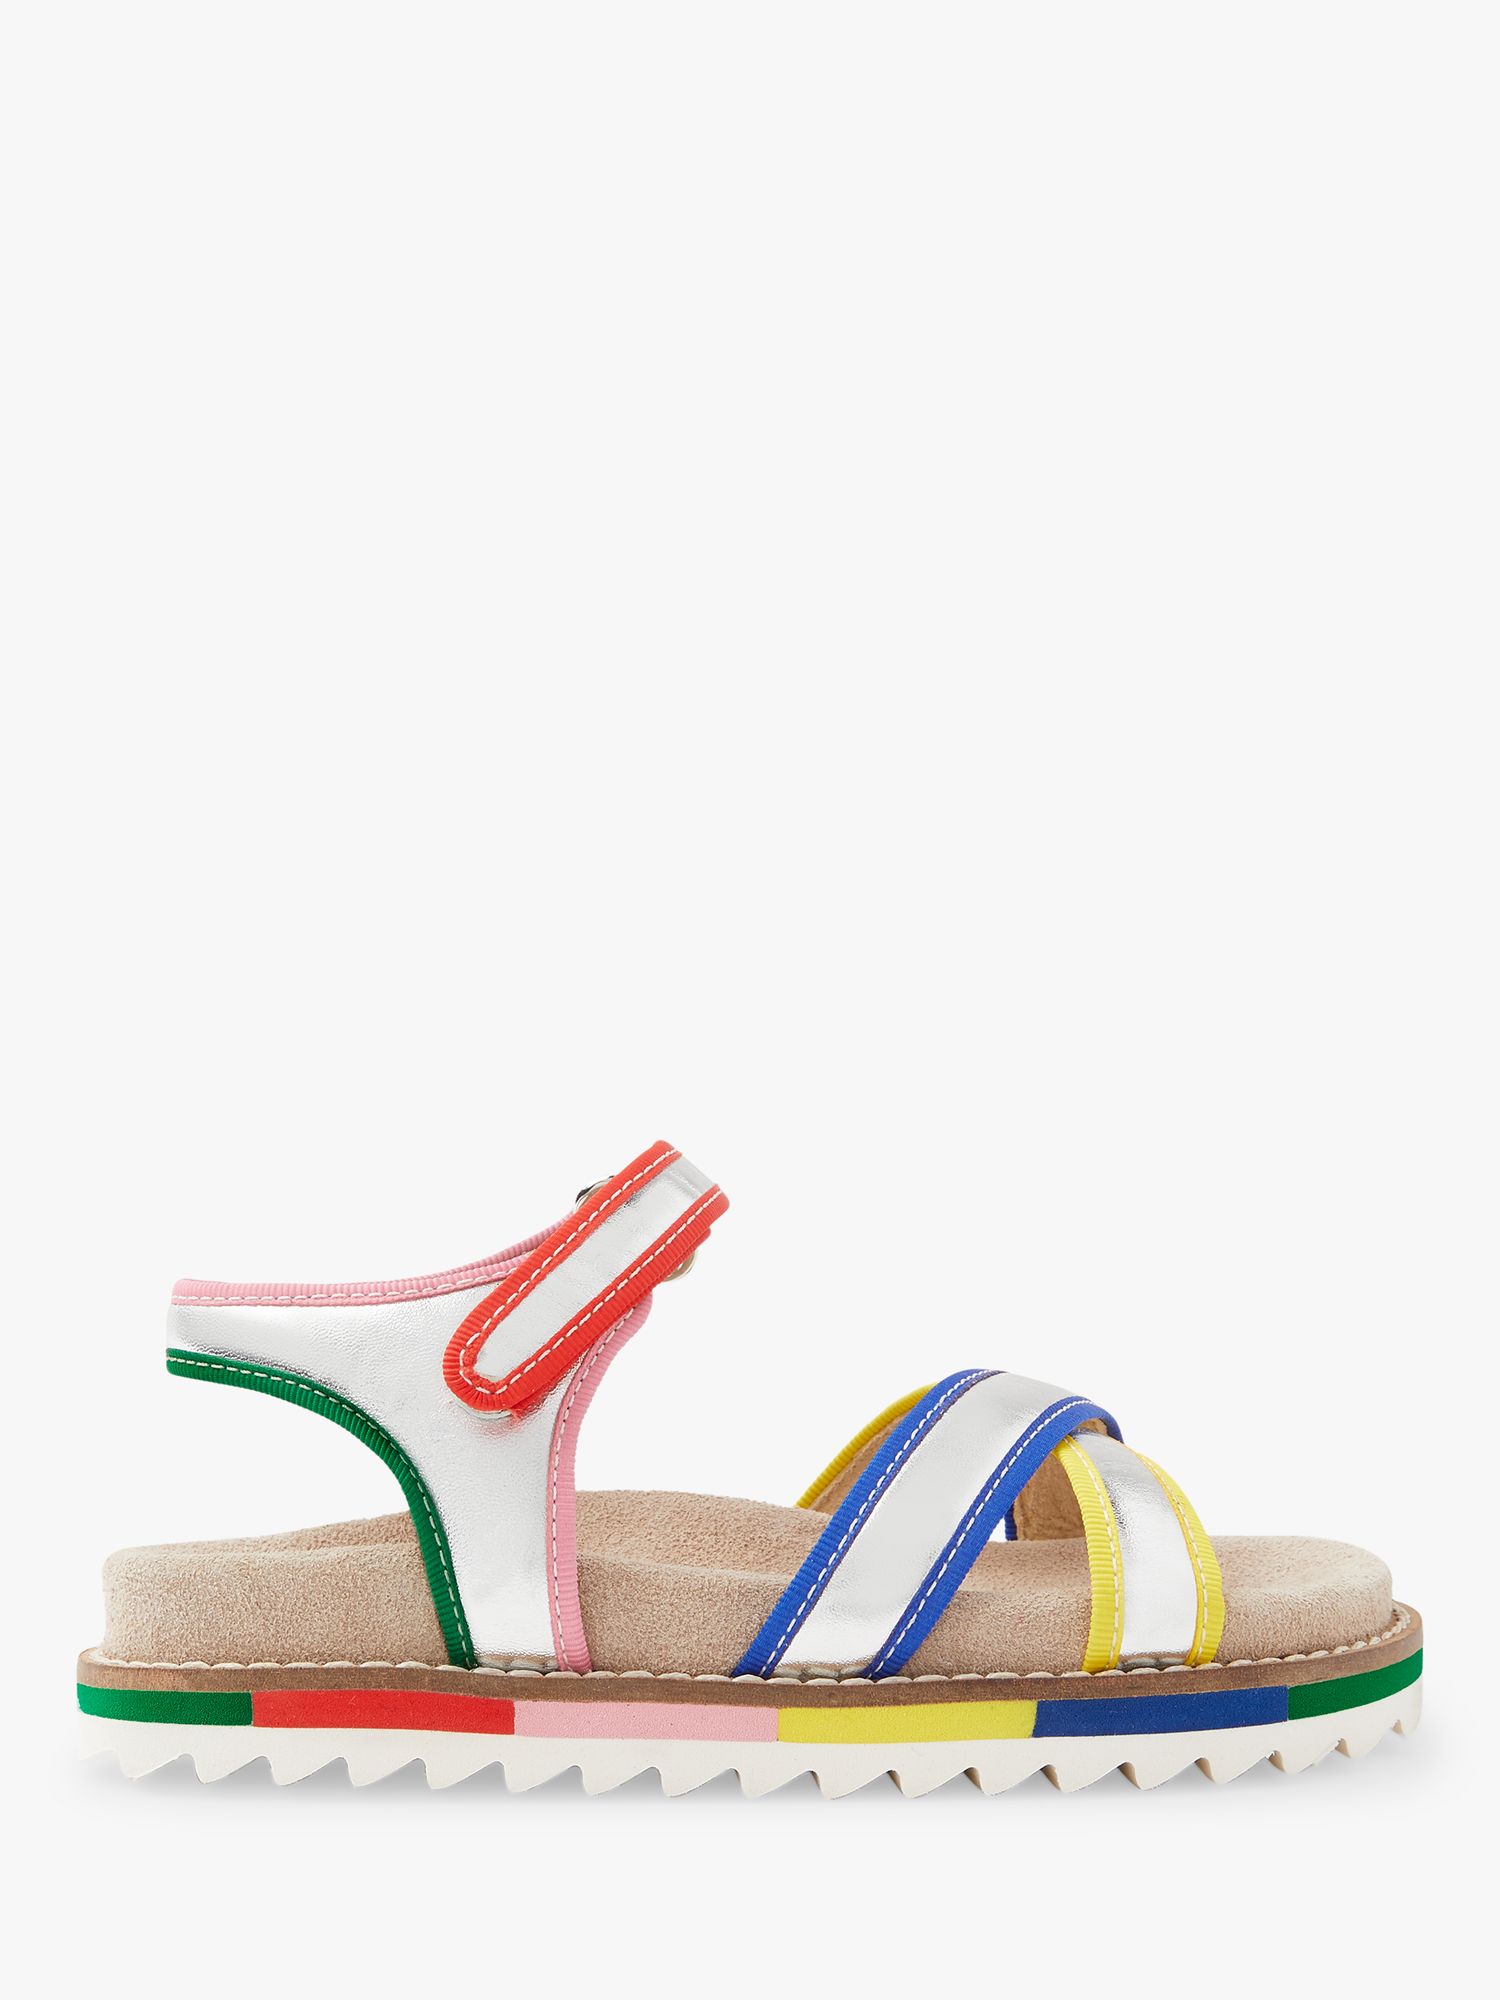 Mini Boden Children's Rainbow Everyday Sandals, Multi